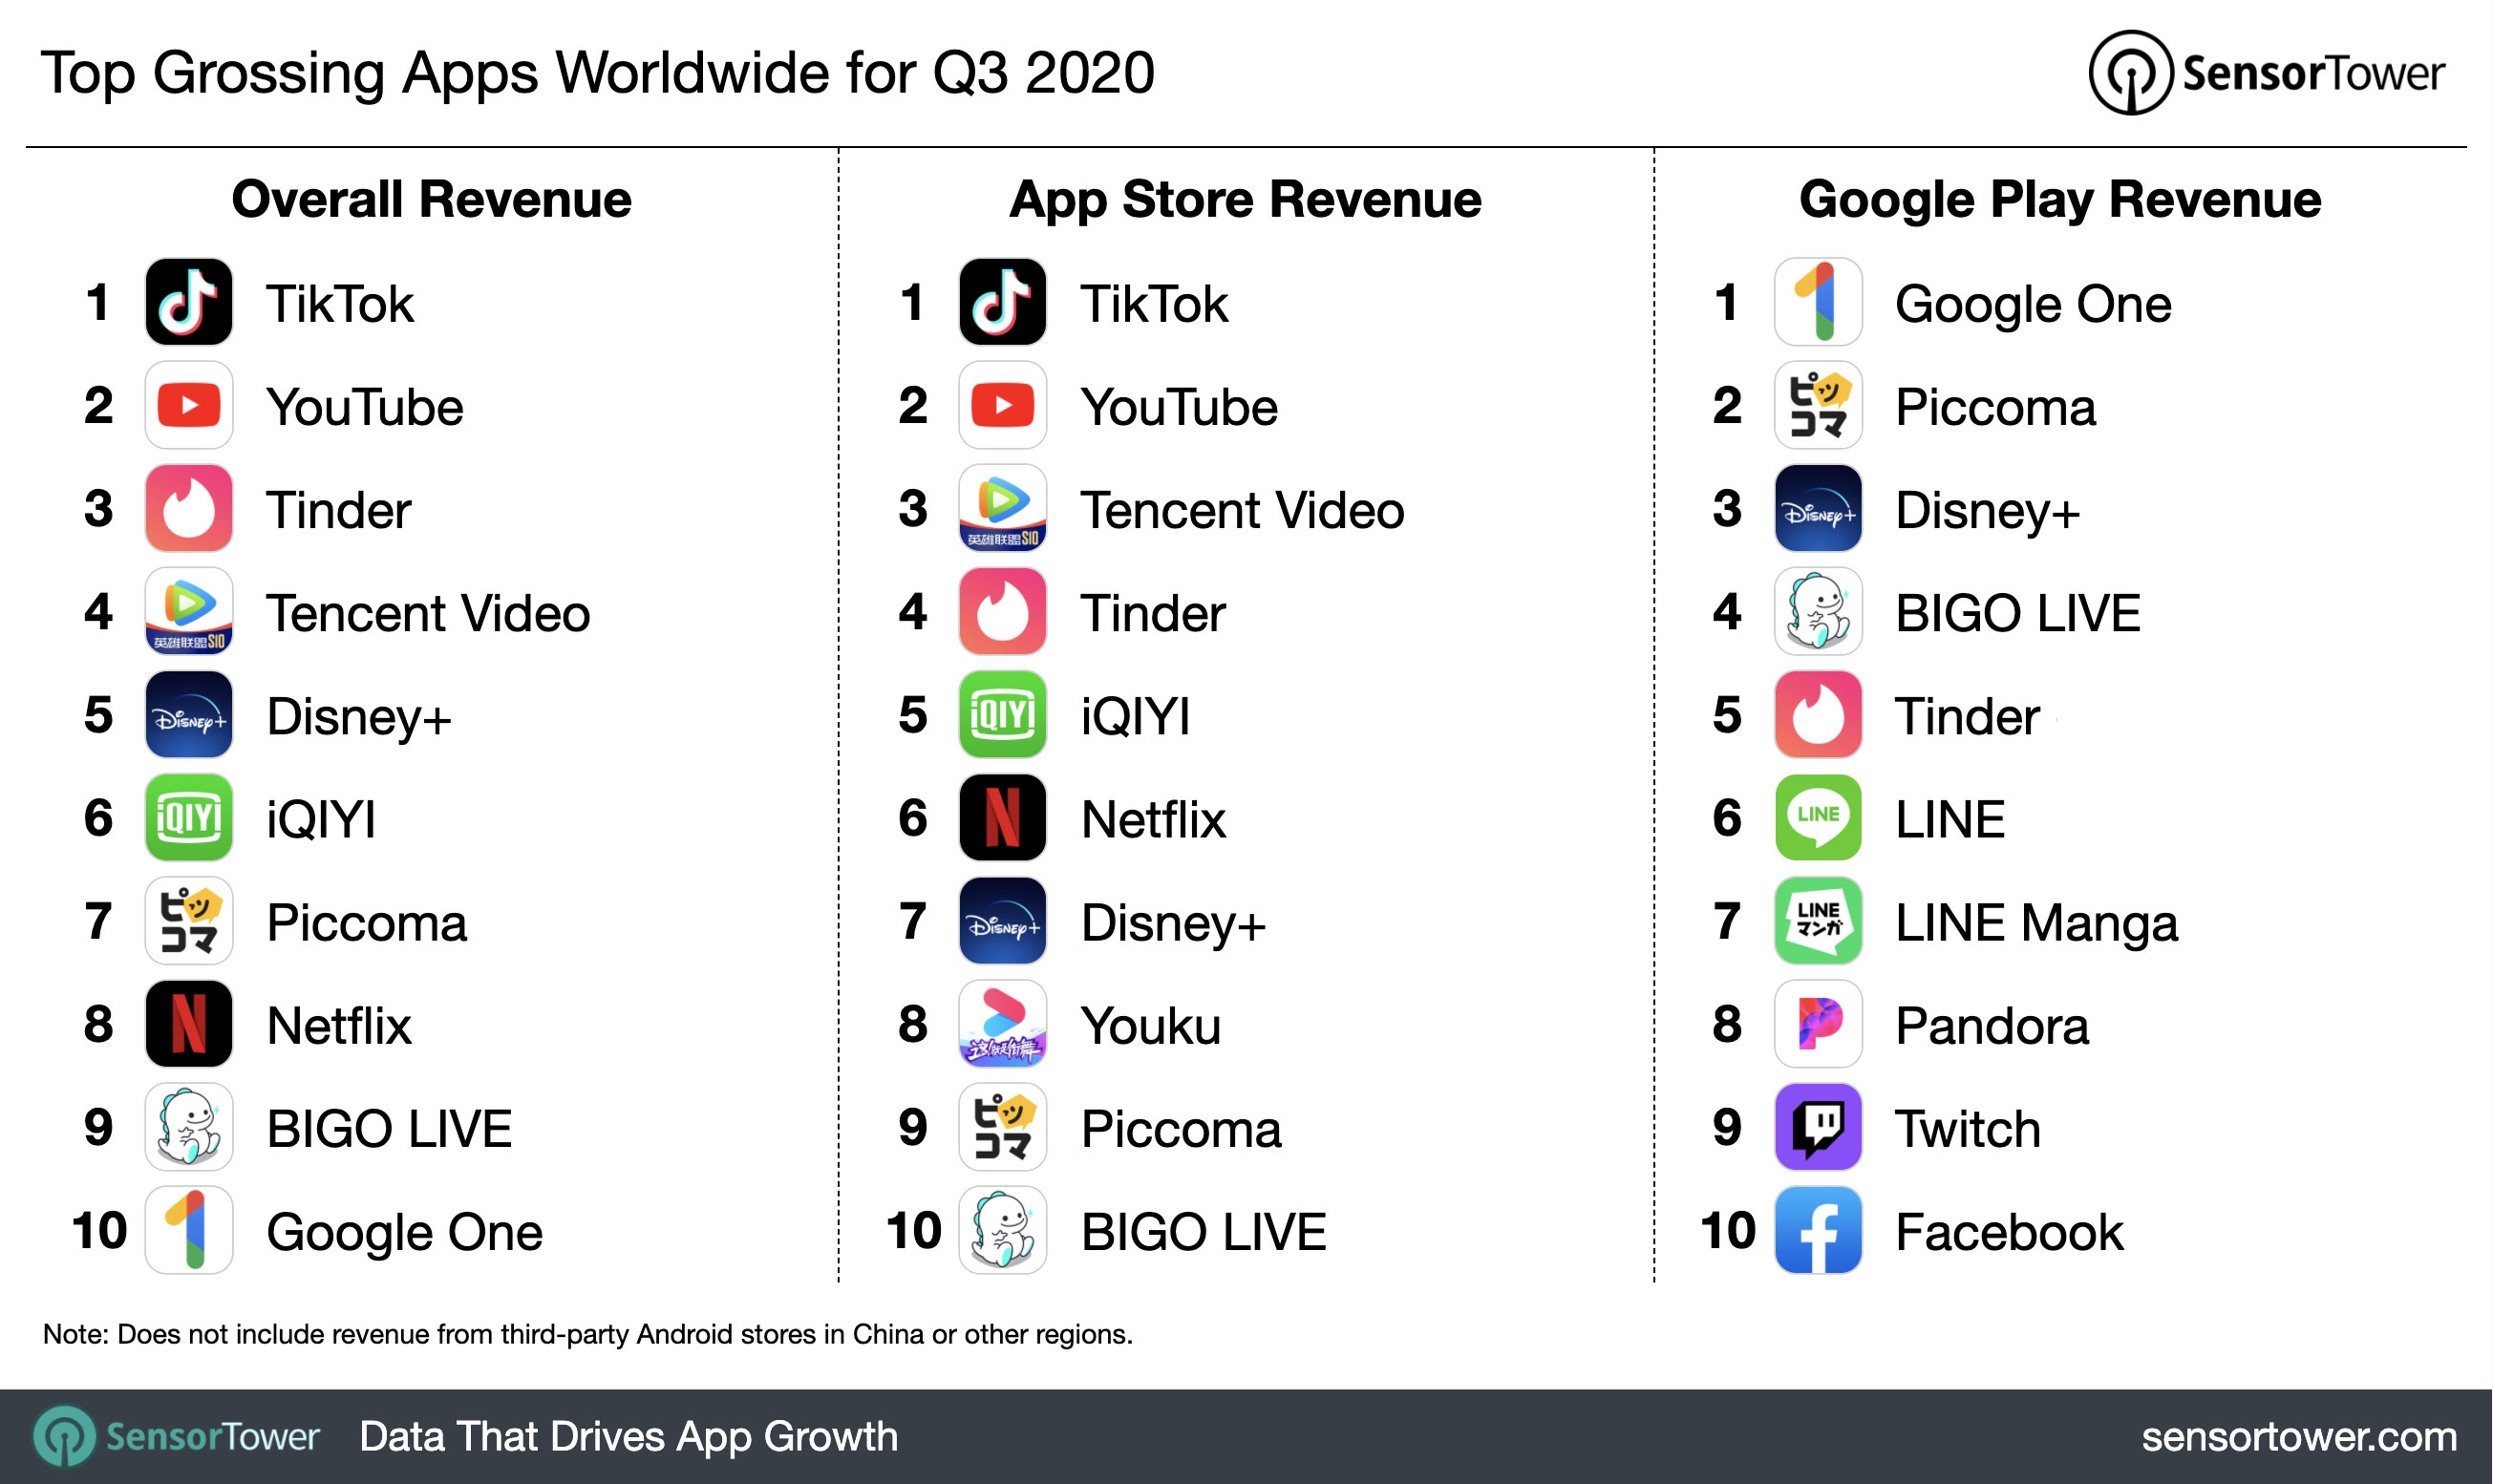 Q3 2020 Top Grossing Apps Worldwide